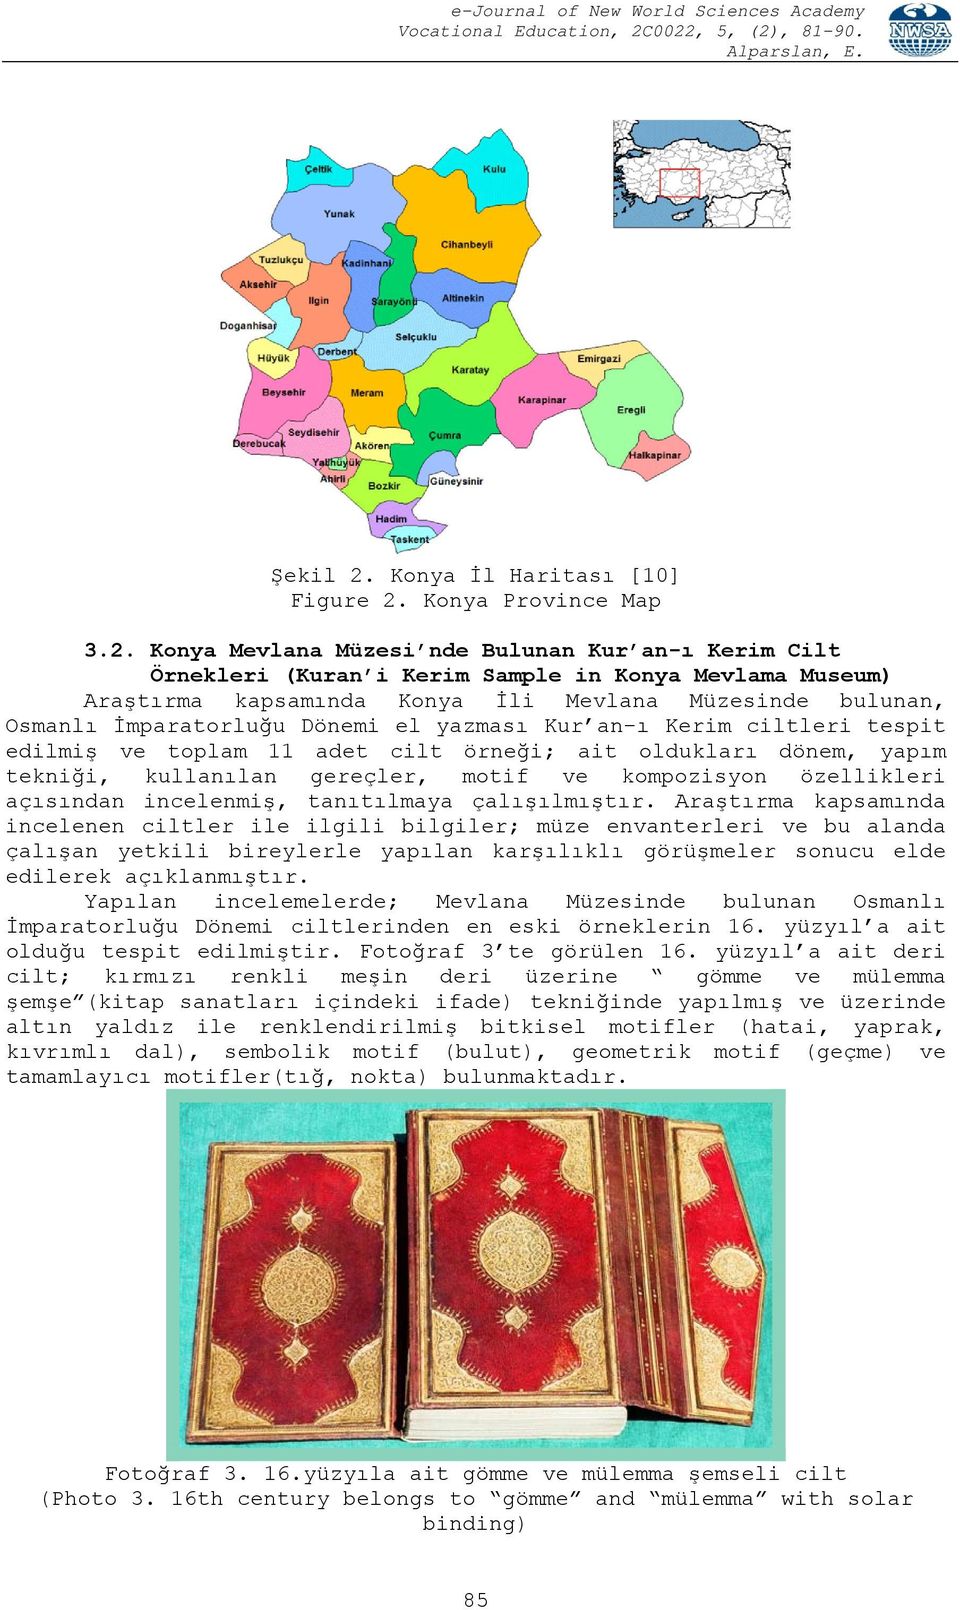 Konya Province Map 3.2.